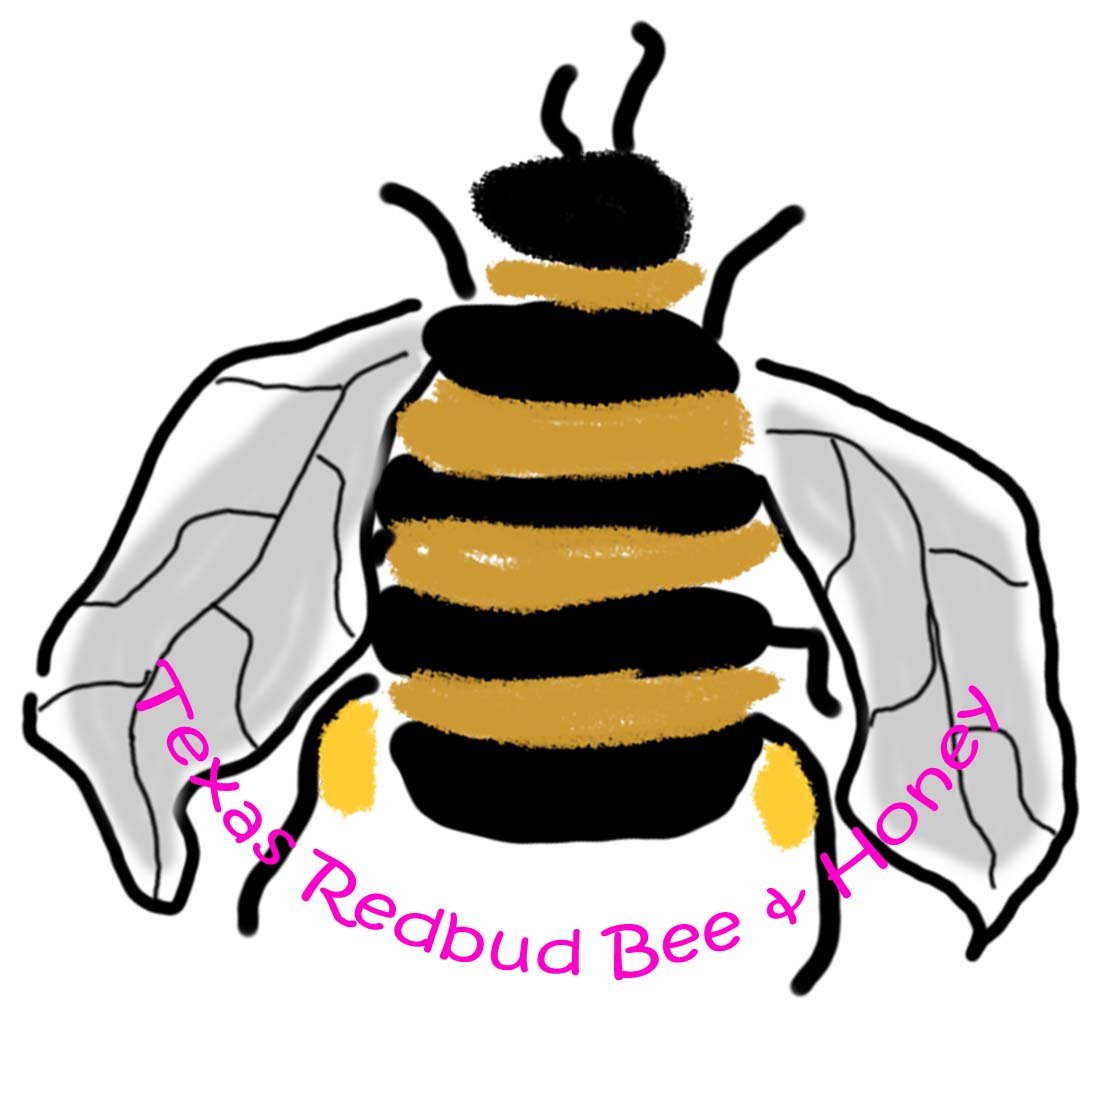  Texas Redbud Bee and Honey